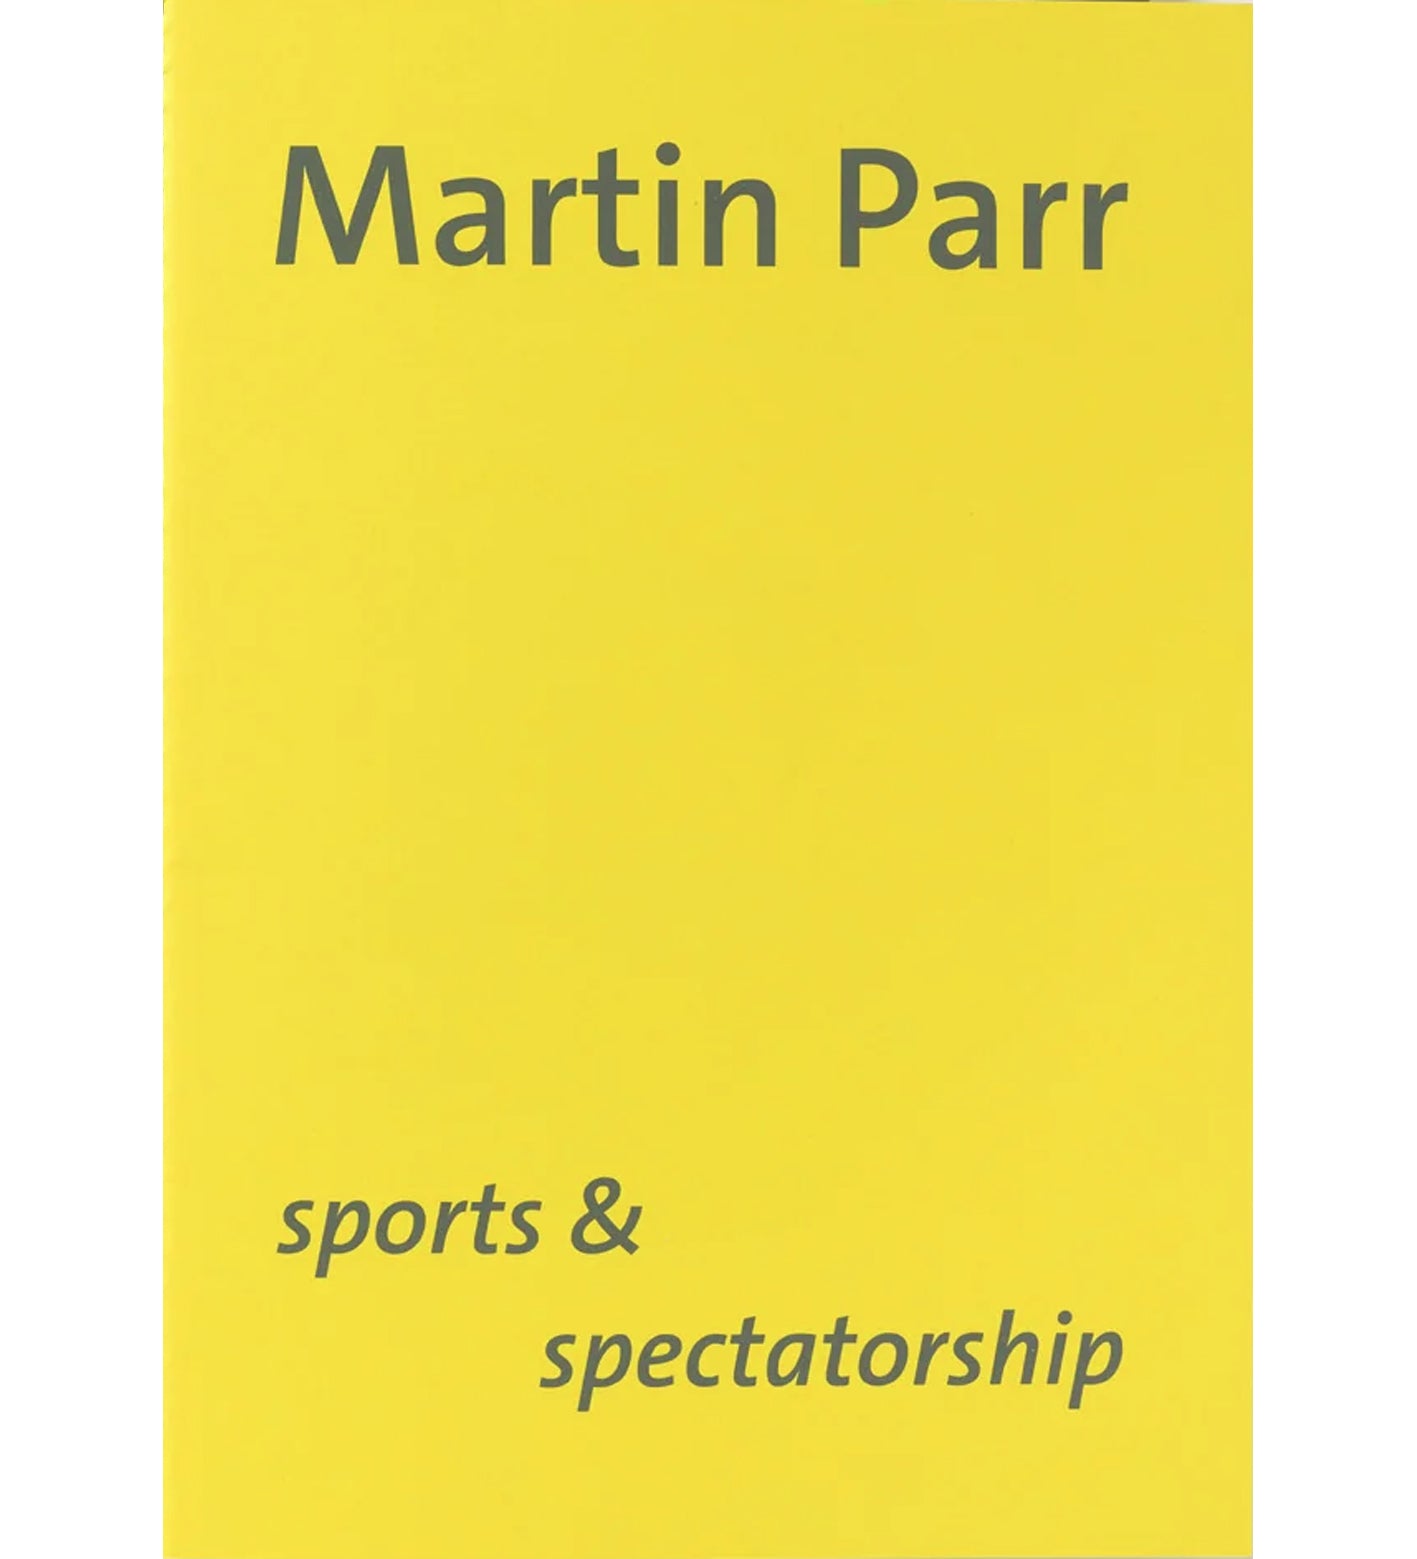 Martin Parr: Sports & Spectatorship (Signed limited edition)